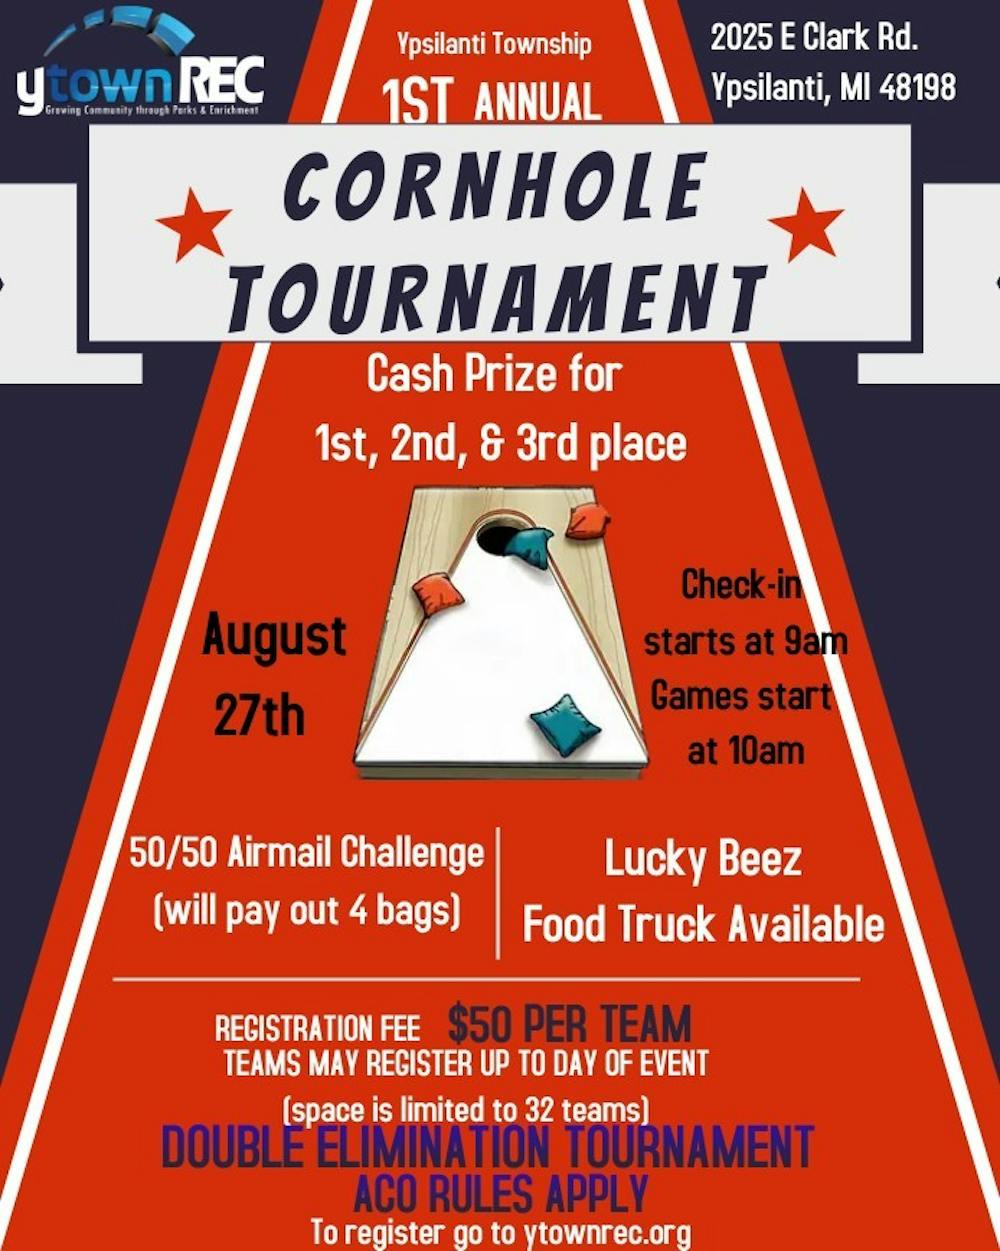 Ypsilanti Town Recreation Department hosting first annual cornhole tournament